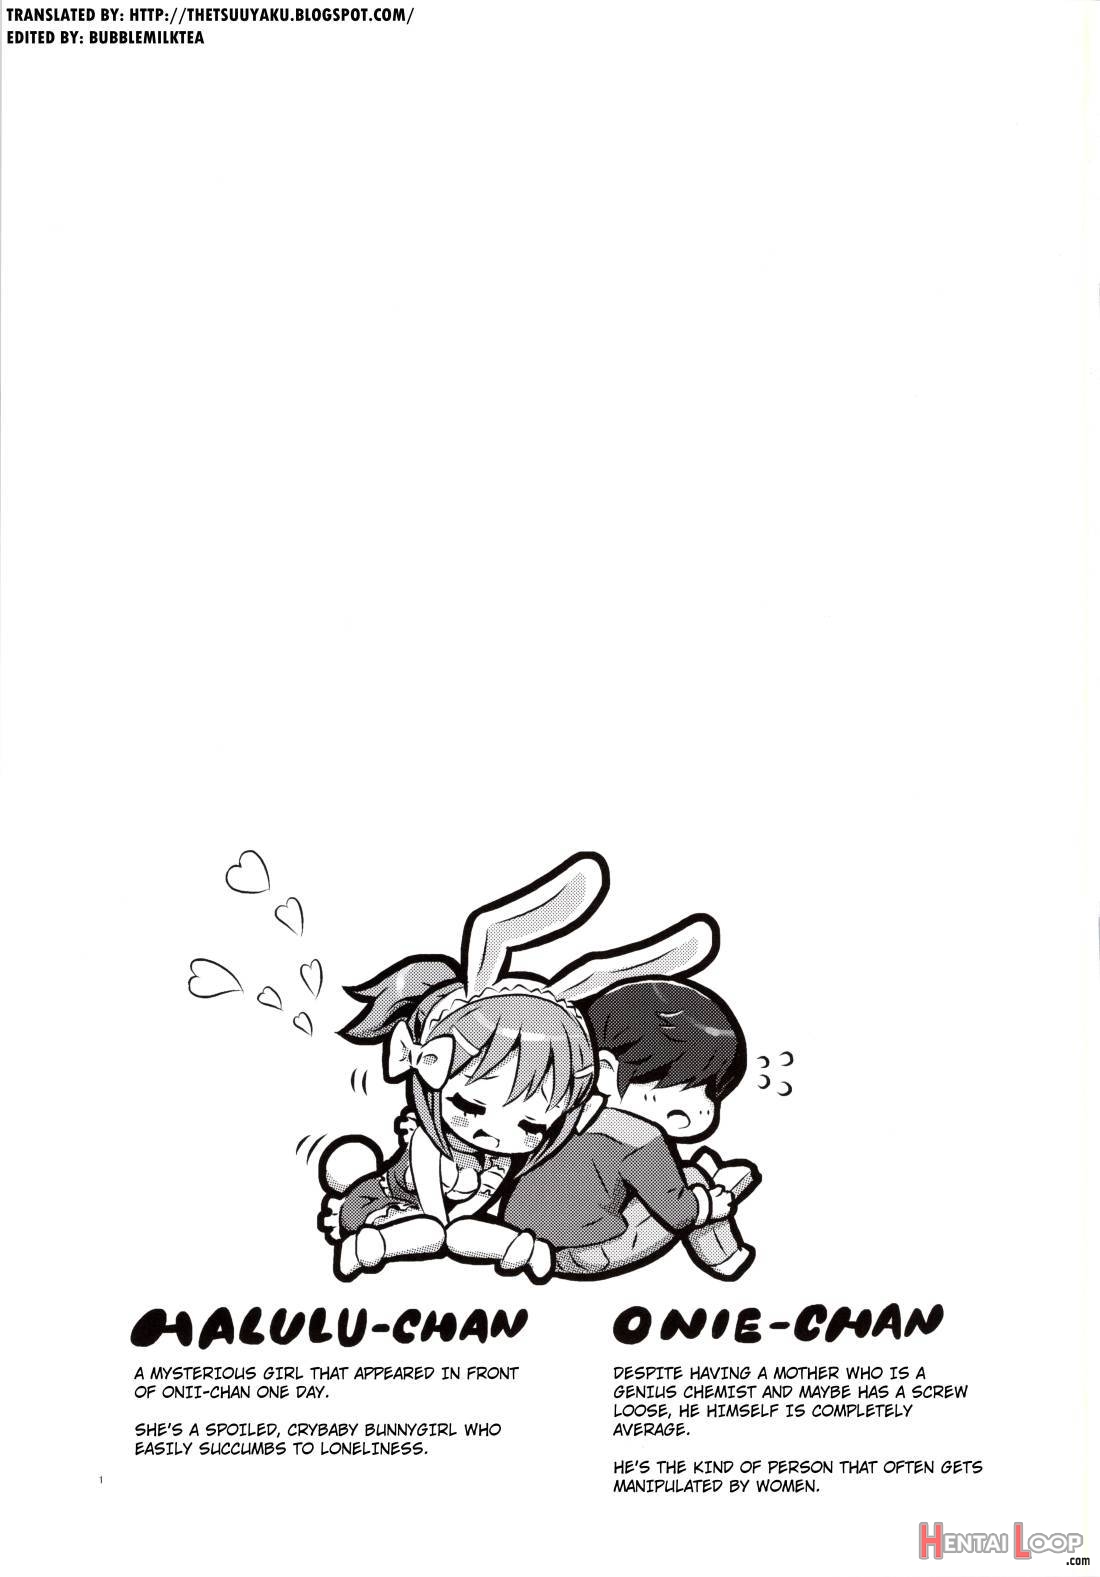 Mimipull Hachi page 3